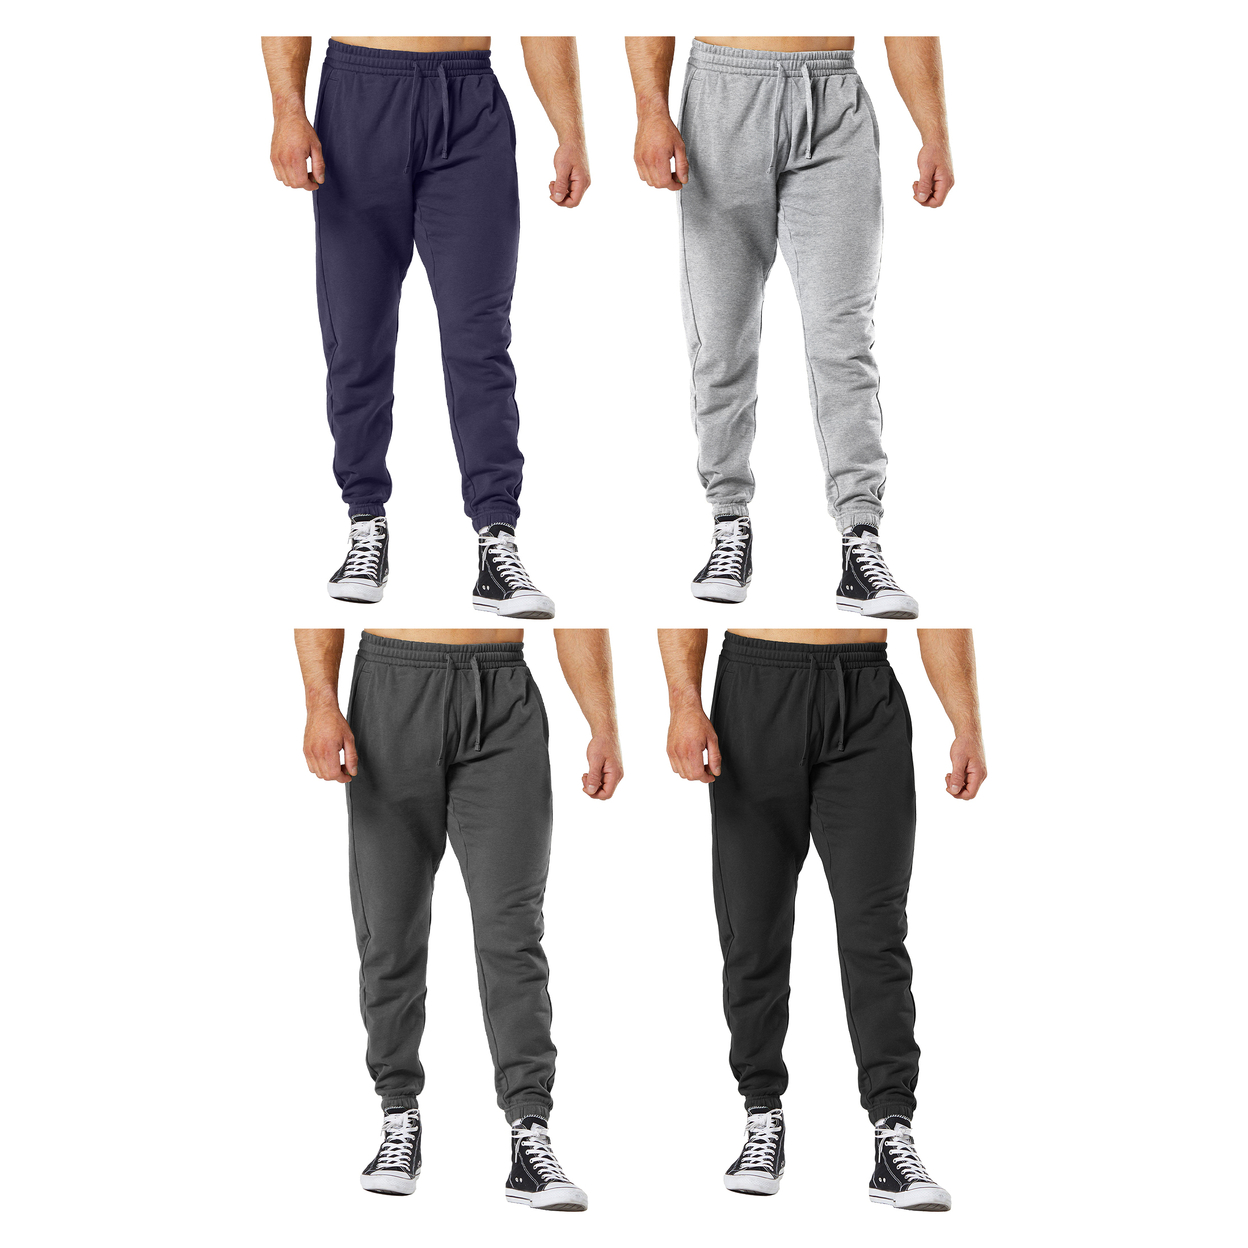 2-Pack: Men's Ultra-Soft Cozy Winter Warm Casual Fleece-Lined Sweatpants Jogger - Black & Black, Medium